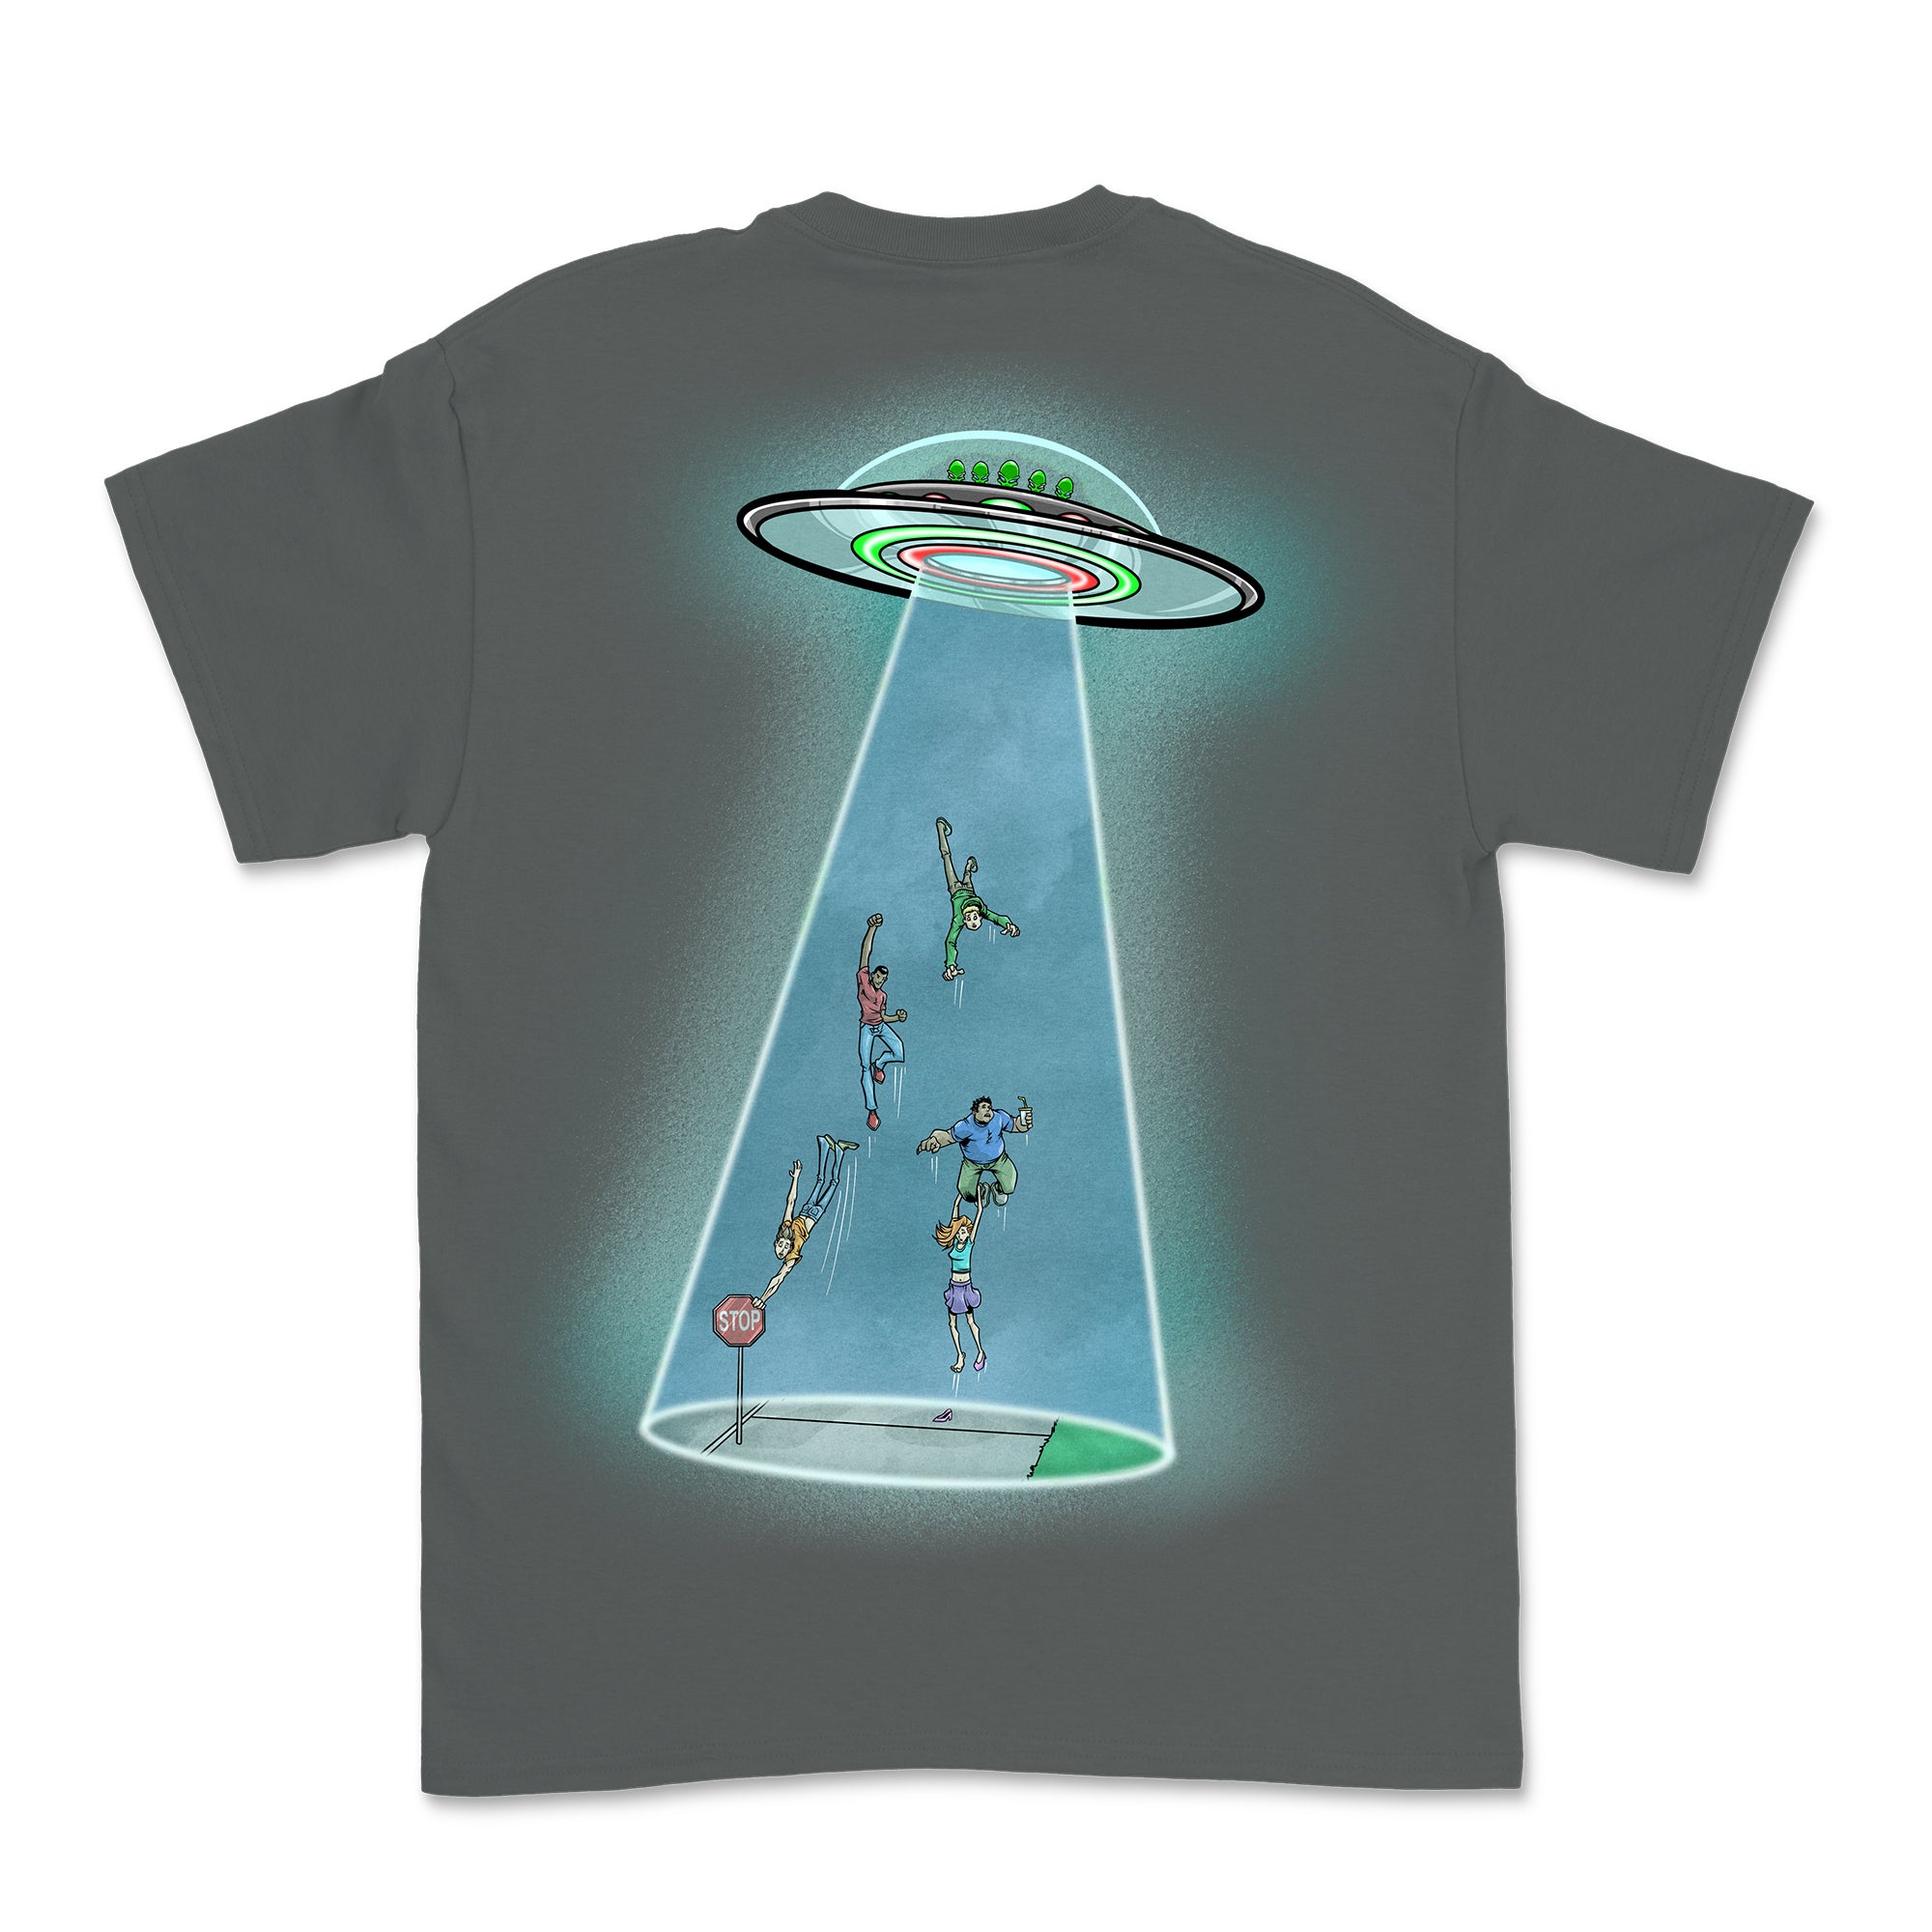 AlienWear - Beam Me Up T-Shirt